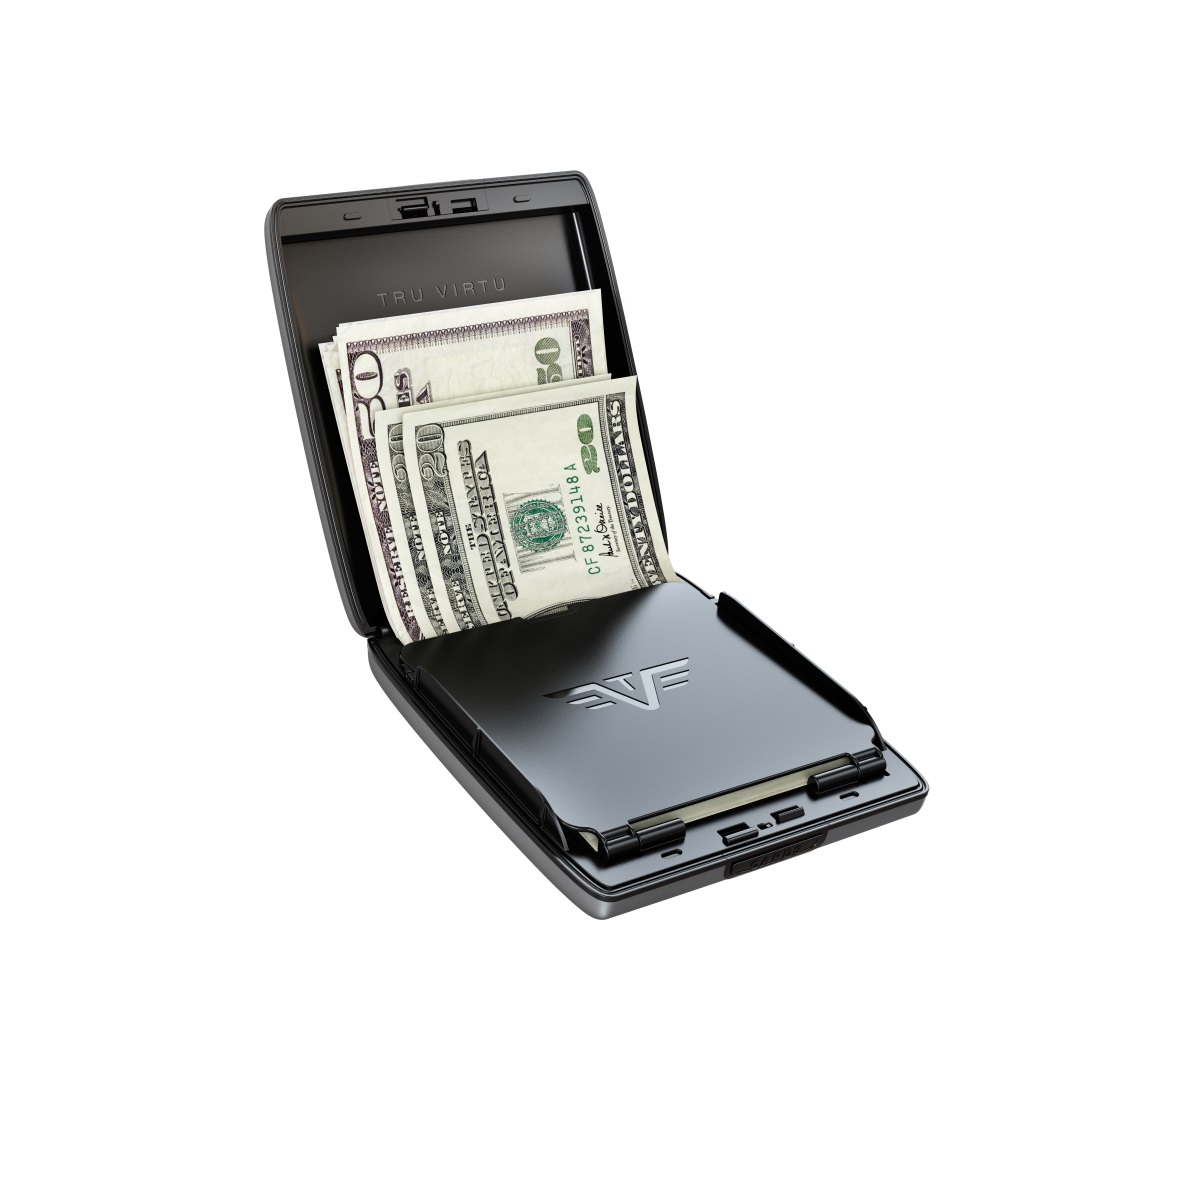 TRU VIRTU Aluminum Wallet Beluga - Money & Cards - Black